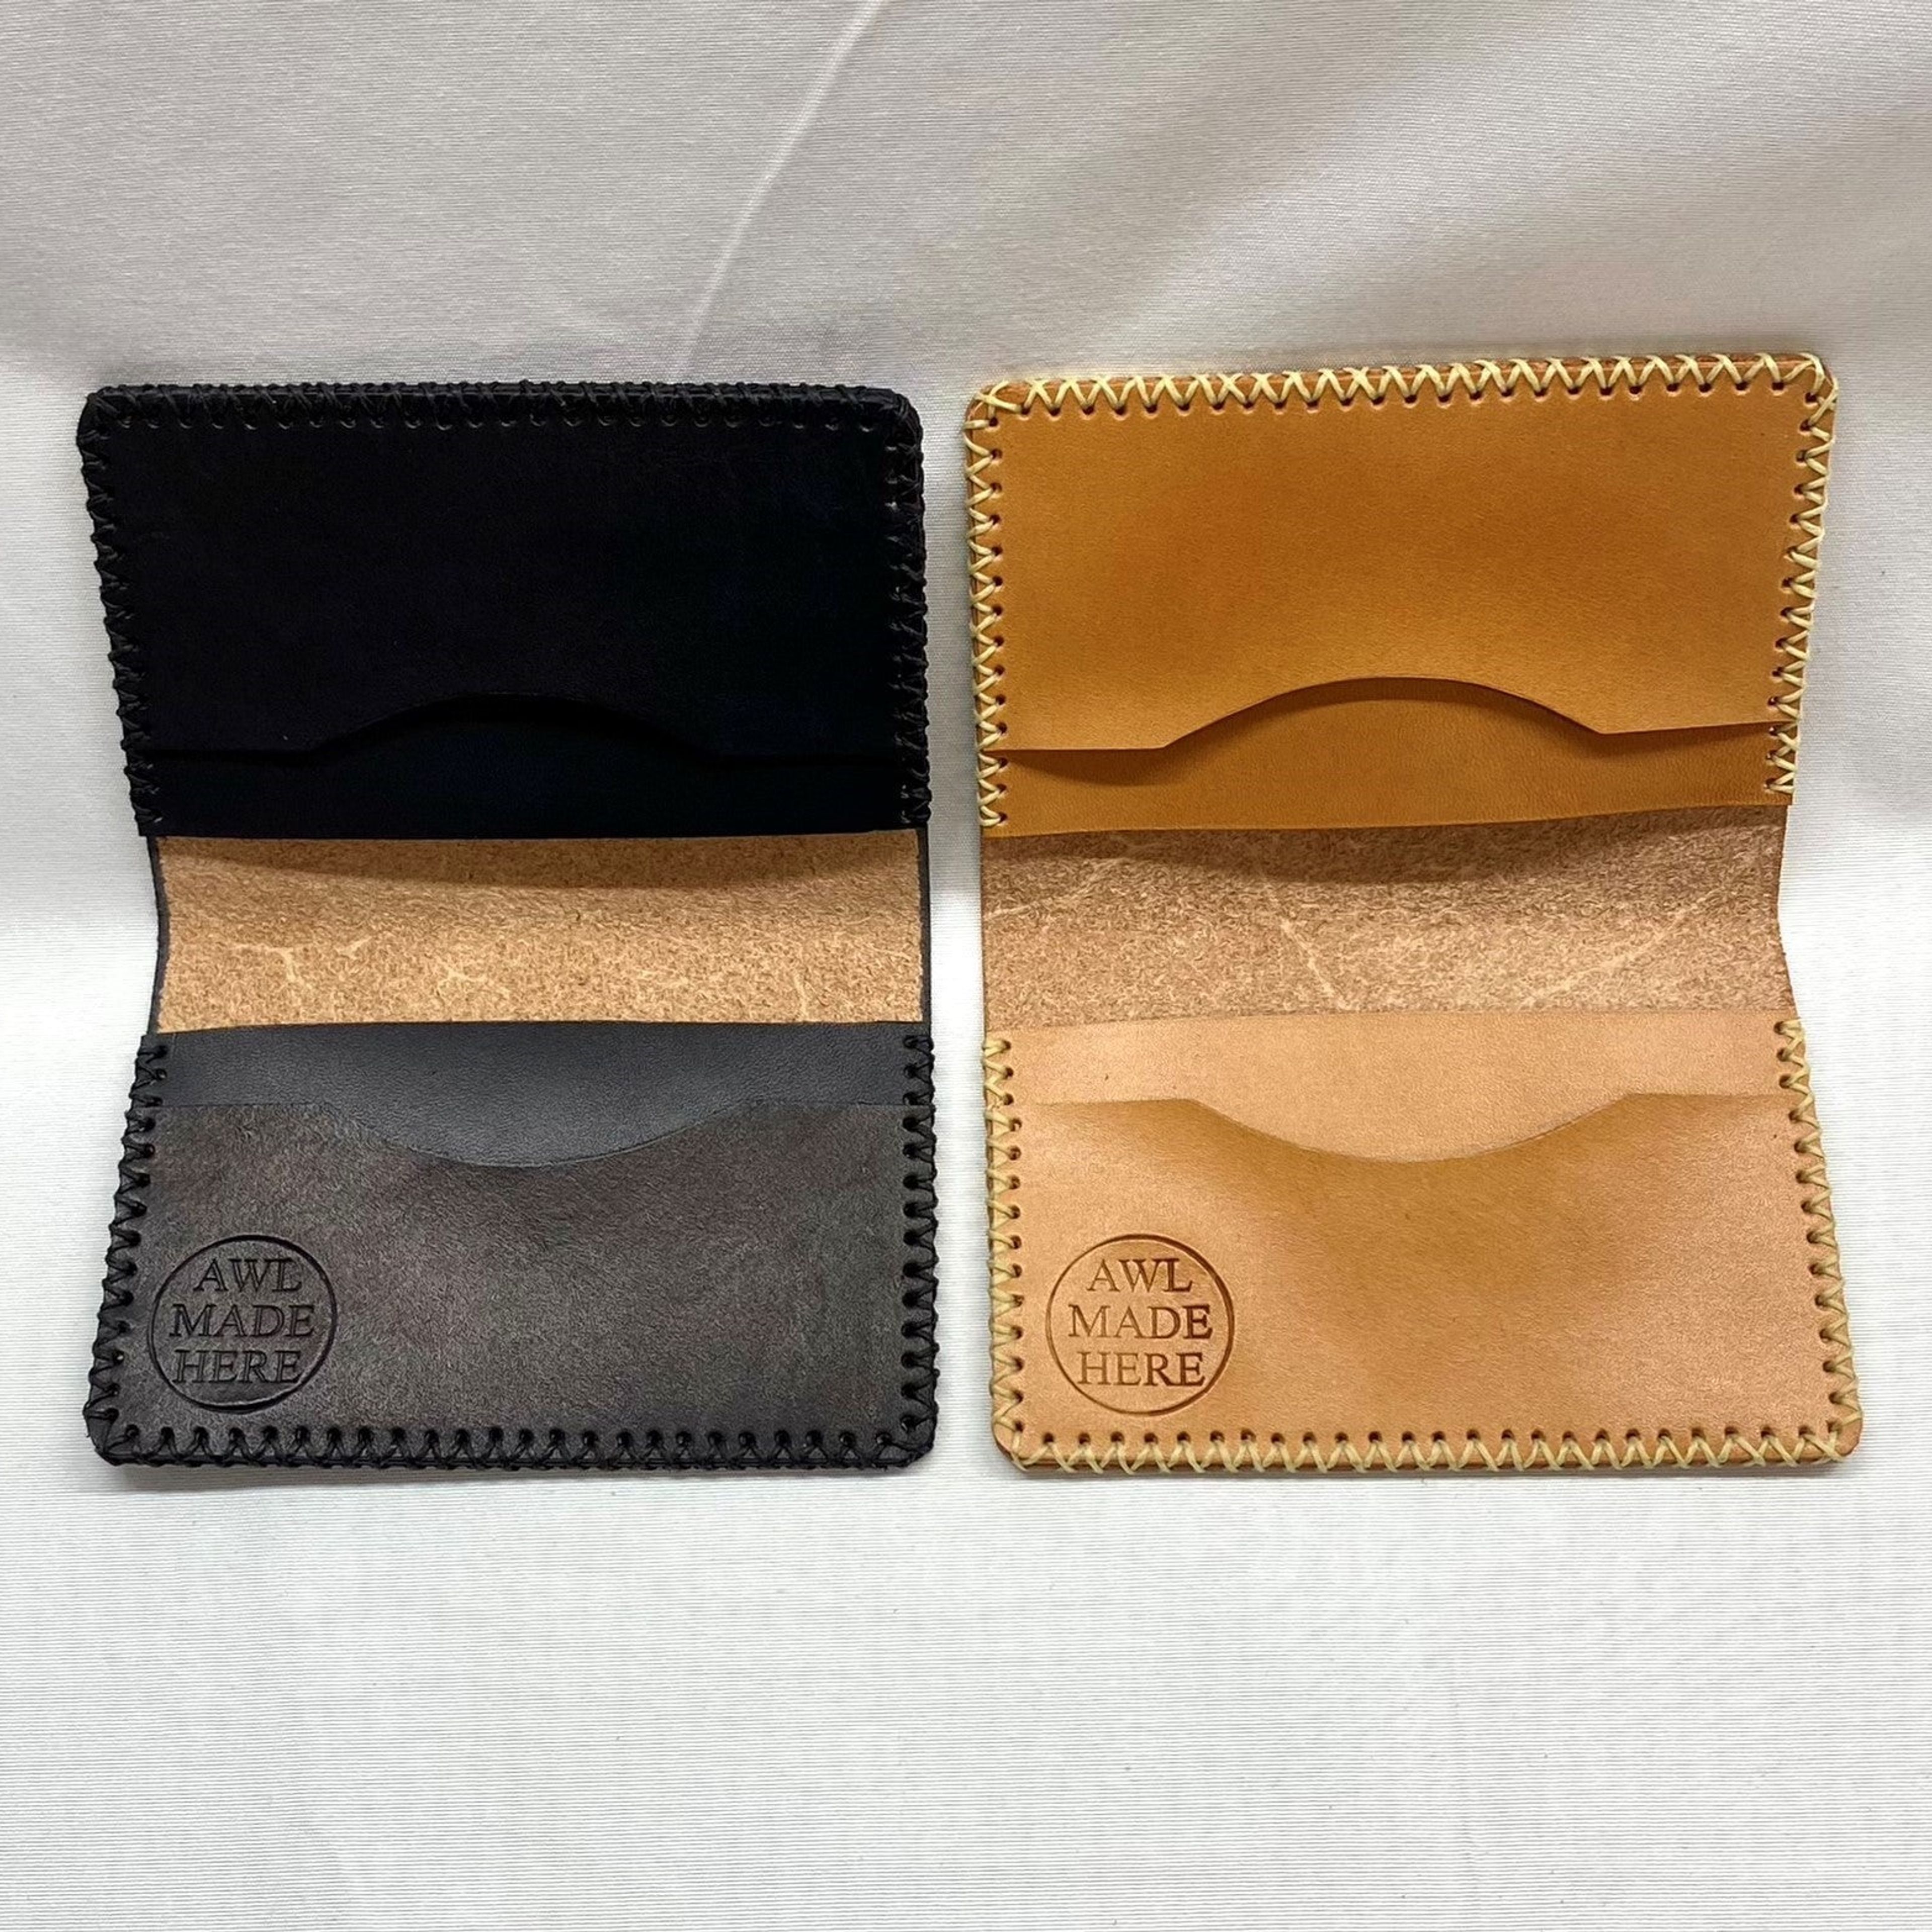 Card Case, Four Pockets. Black or Natural Tan